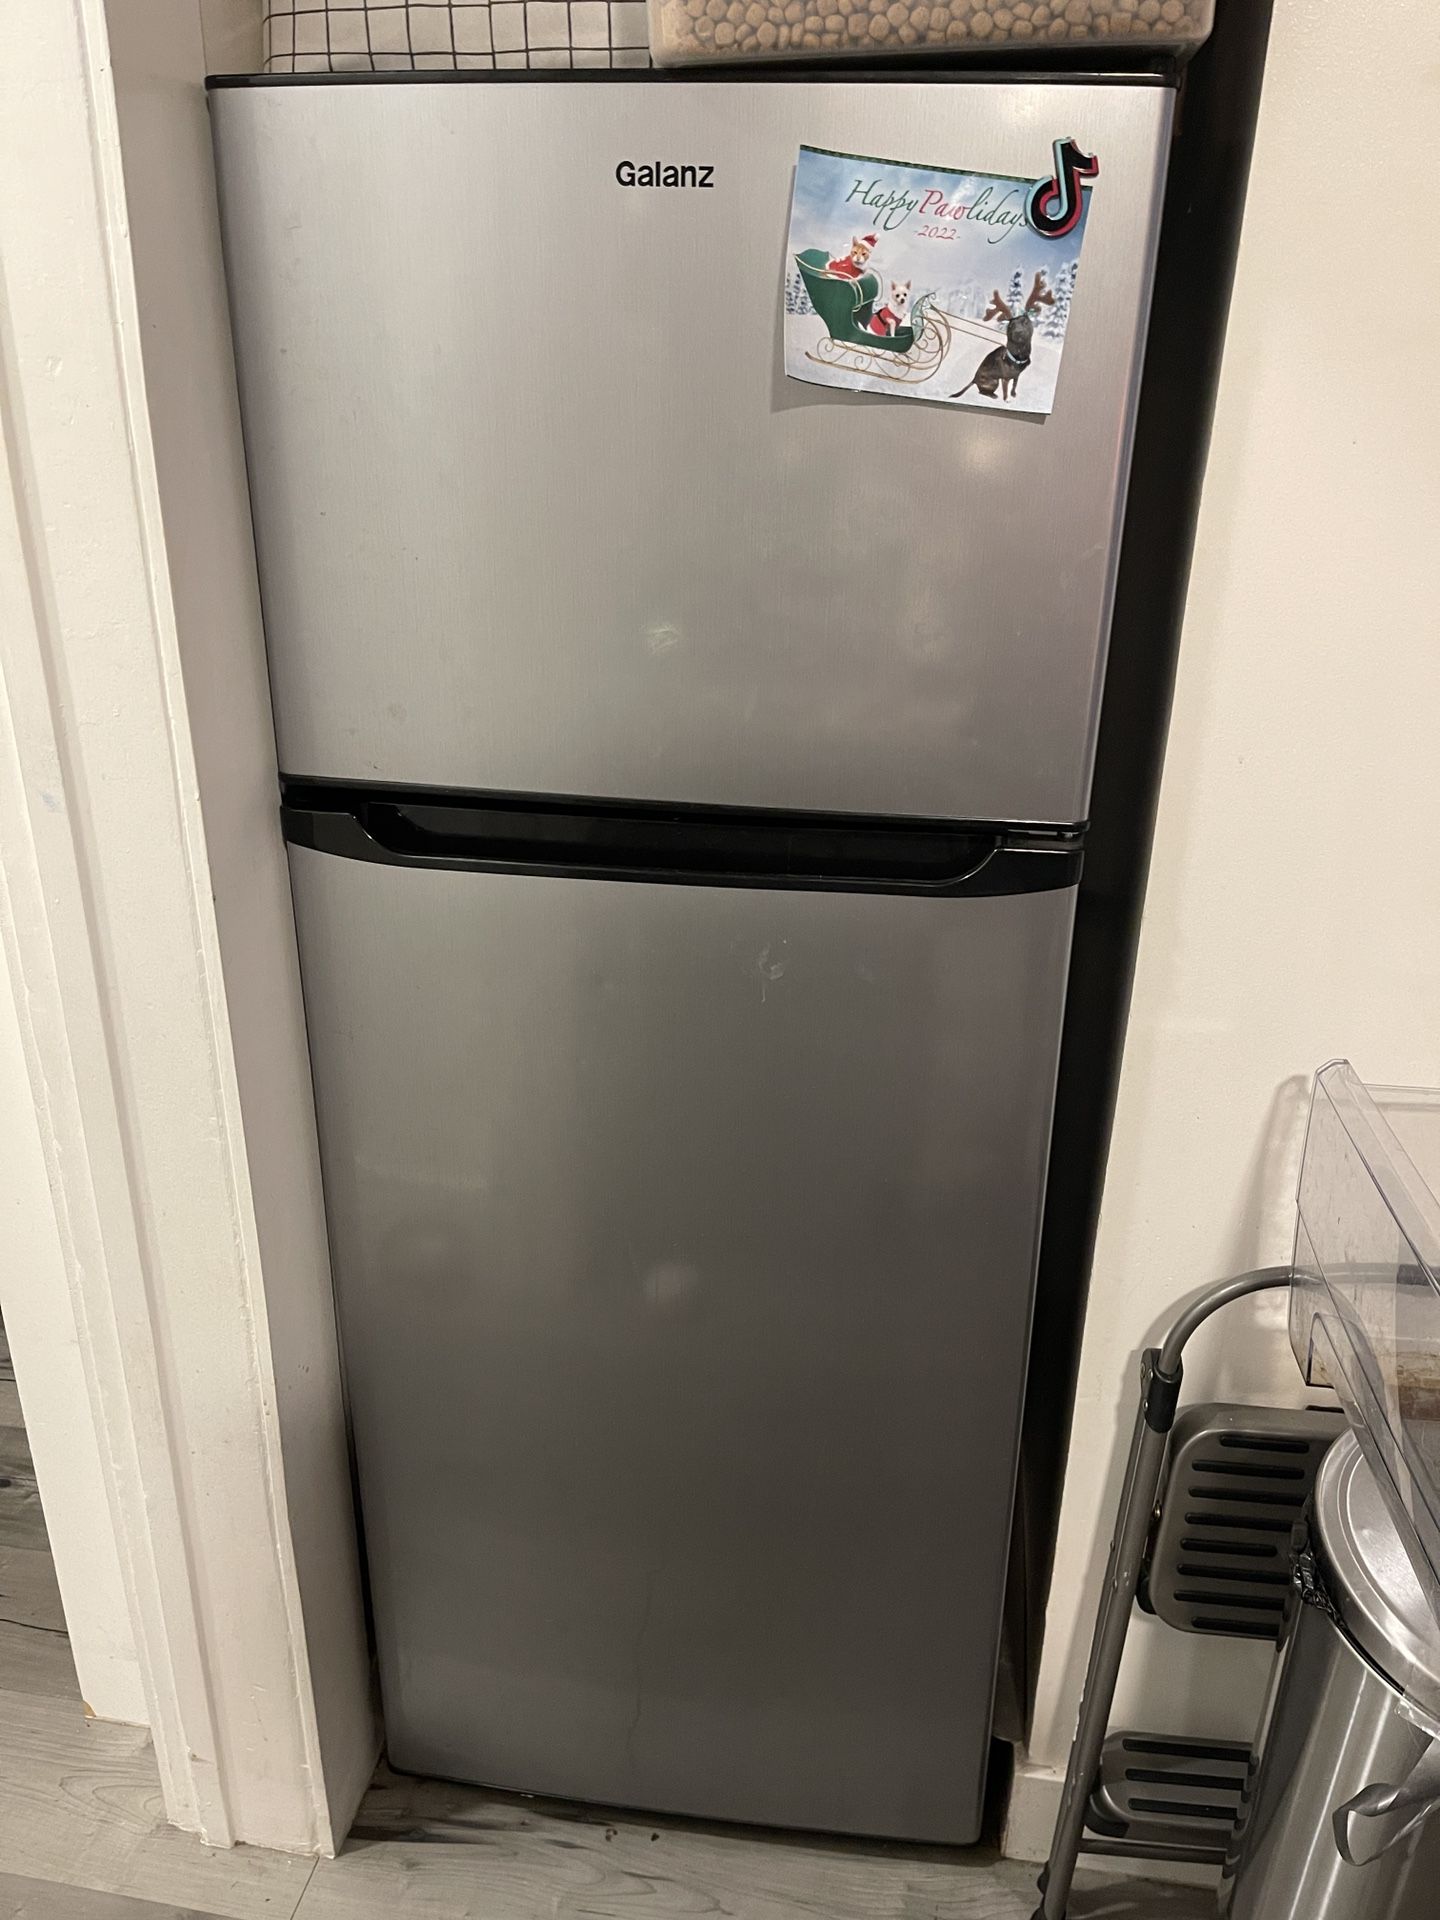 Galanz 10-cu ft Freezer Refrigerator (Stainless Steel Look)